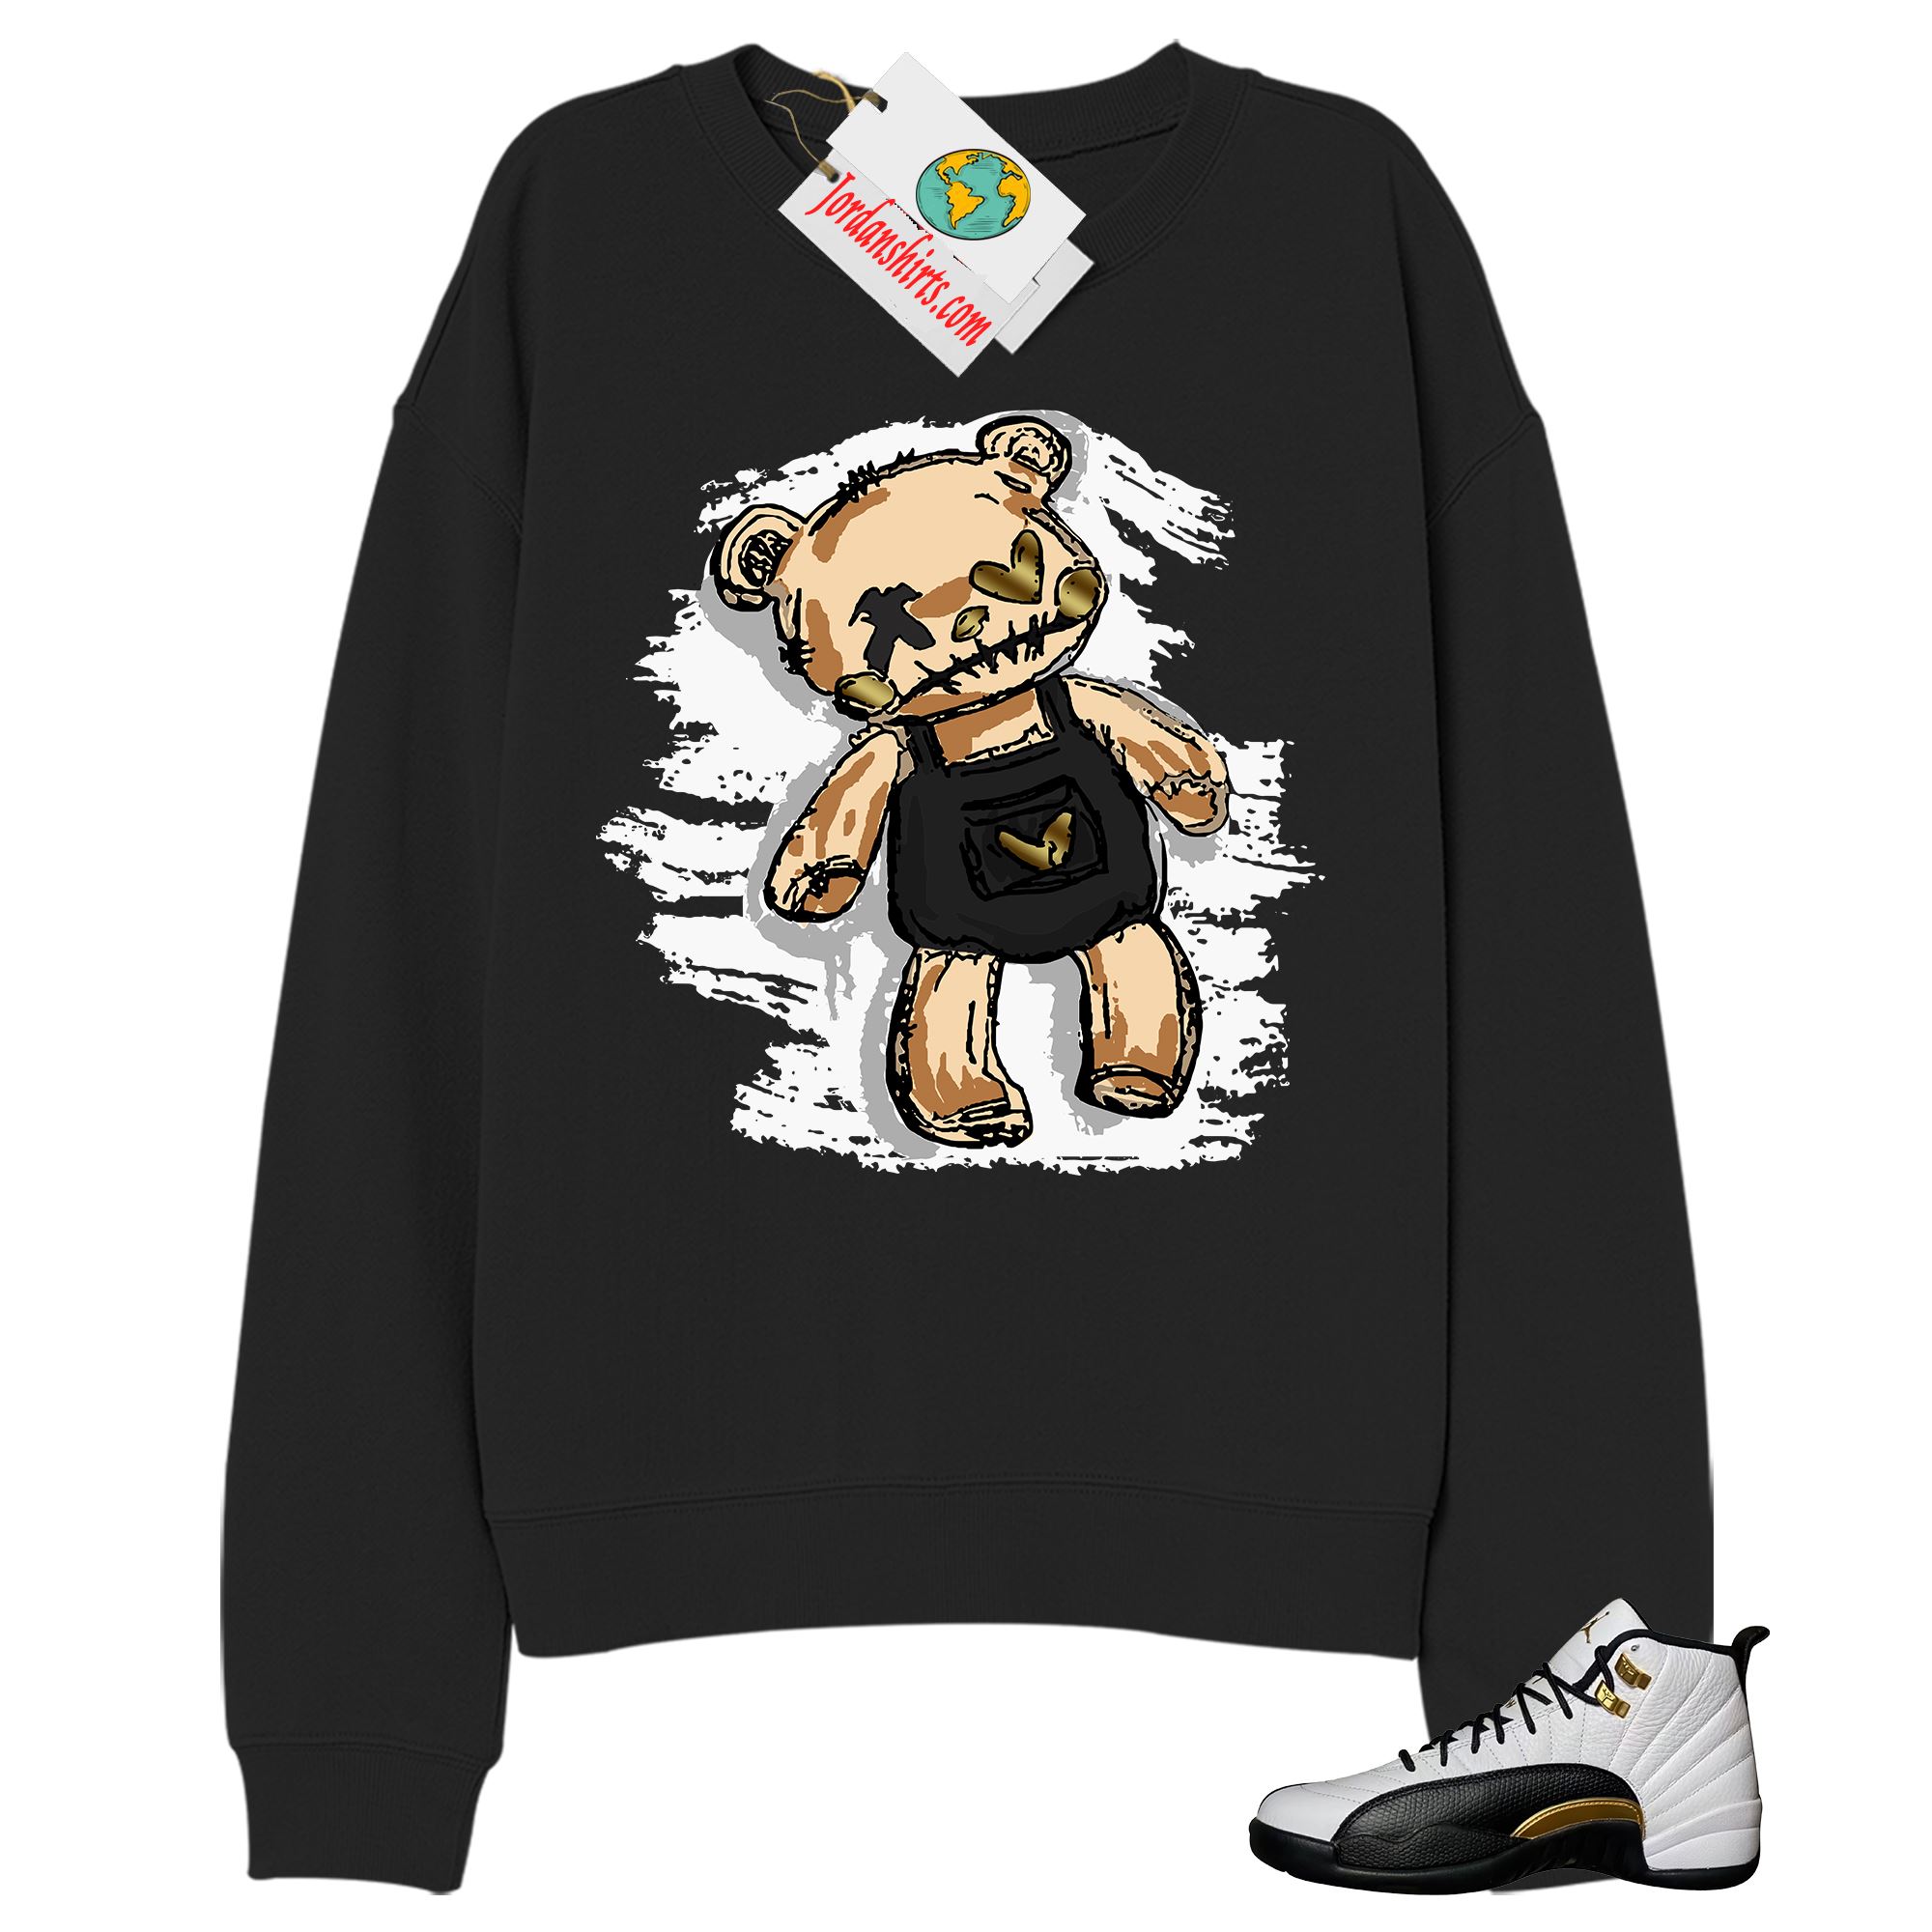 Jordan 12 Sweatshirt, Teddy Bear Broken Heart Black Sweatshirt Air Jordan 12 Royalty 12s Full Size Up To 5xl